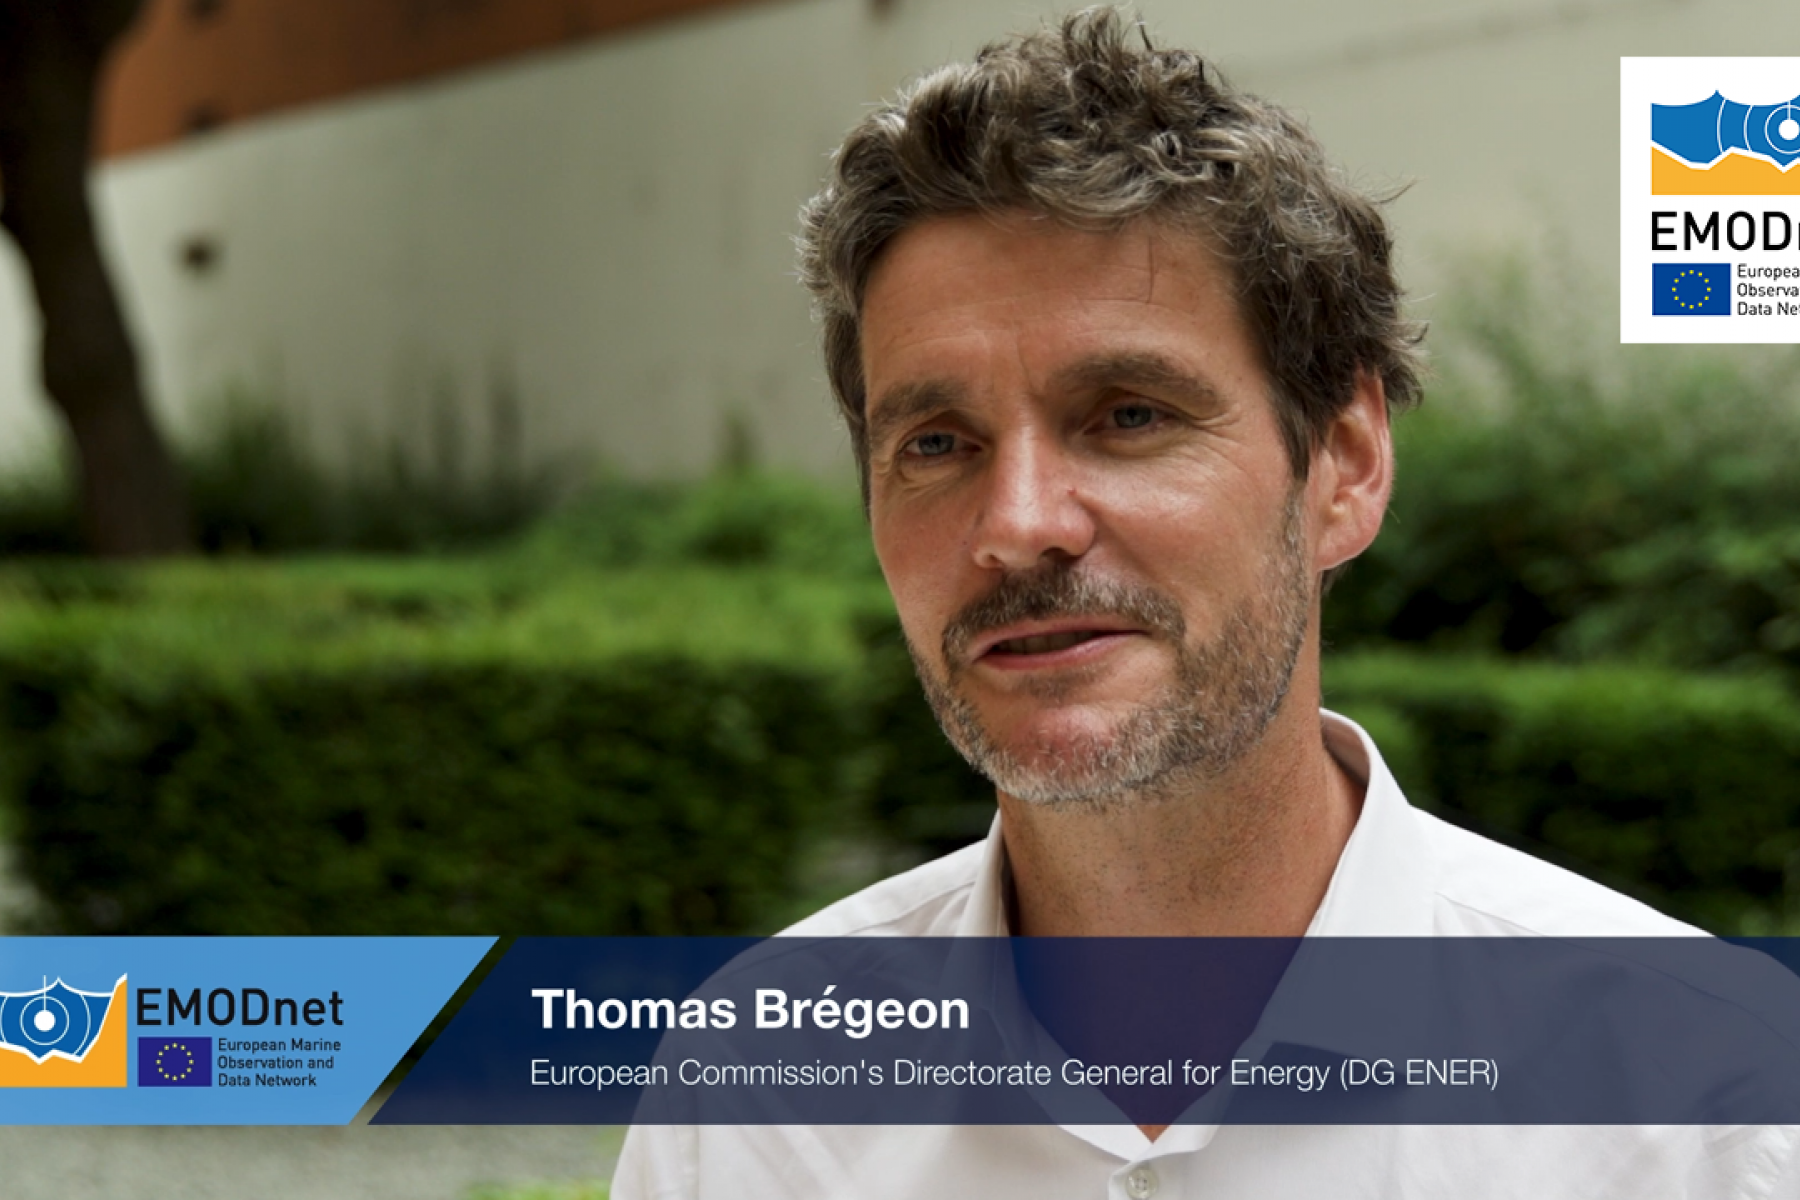 Thomas Brégeon DG ENER on EU offshore energy targets